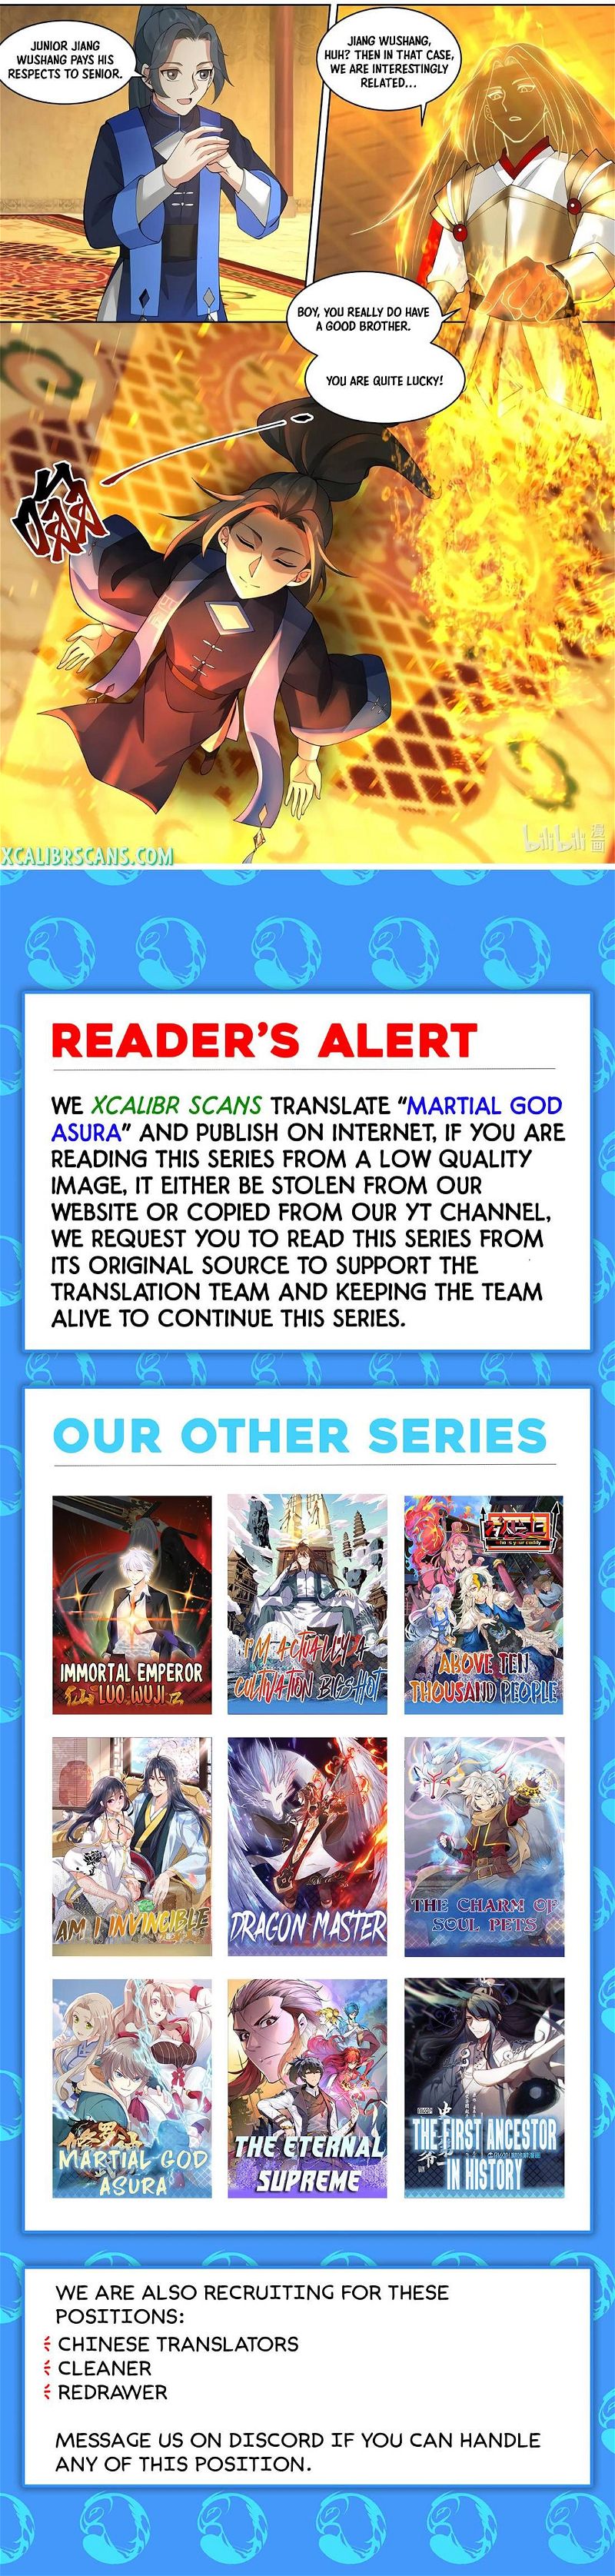 Martial God Asura Chapter 506 page 10